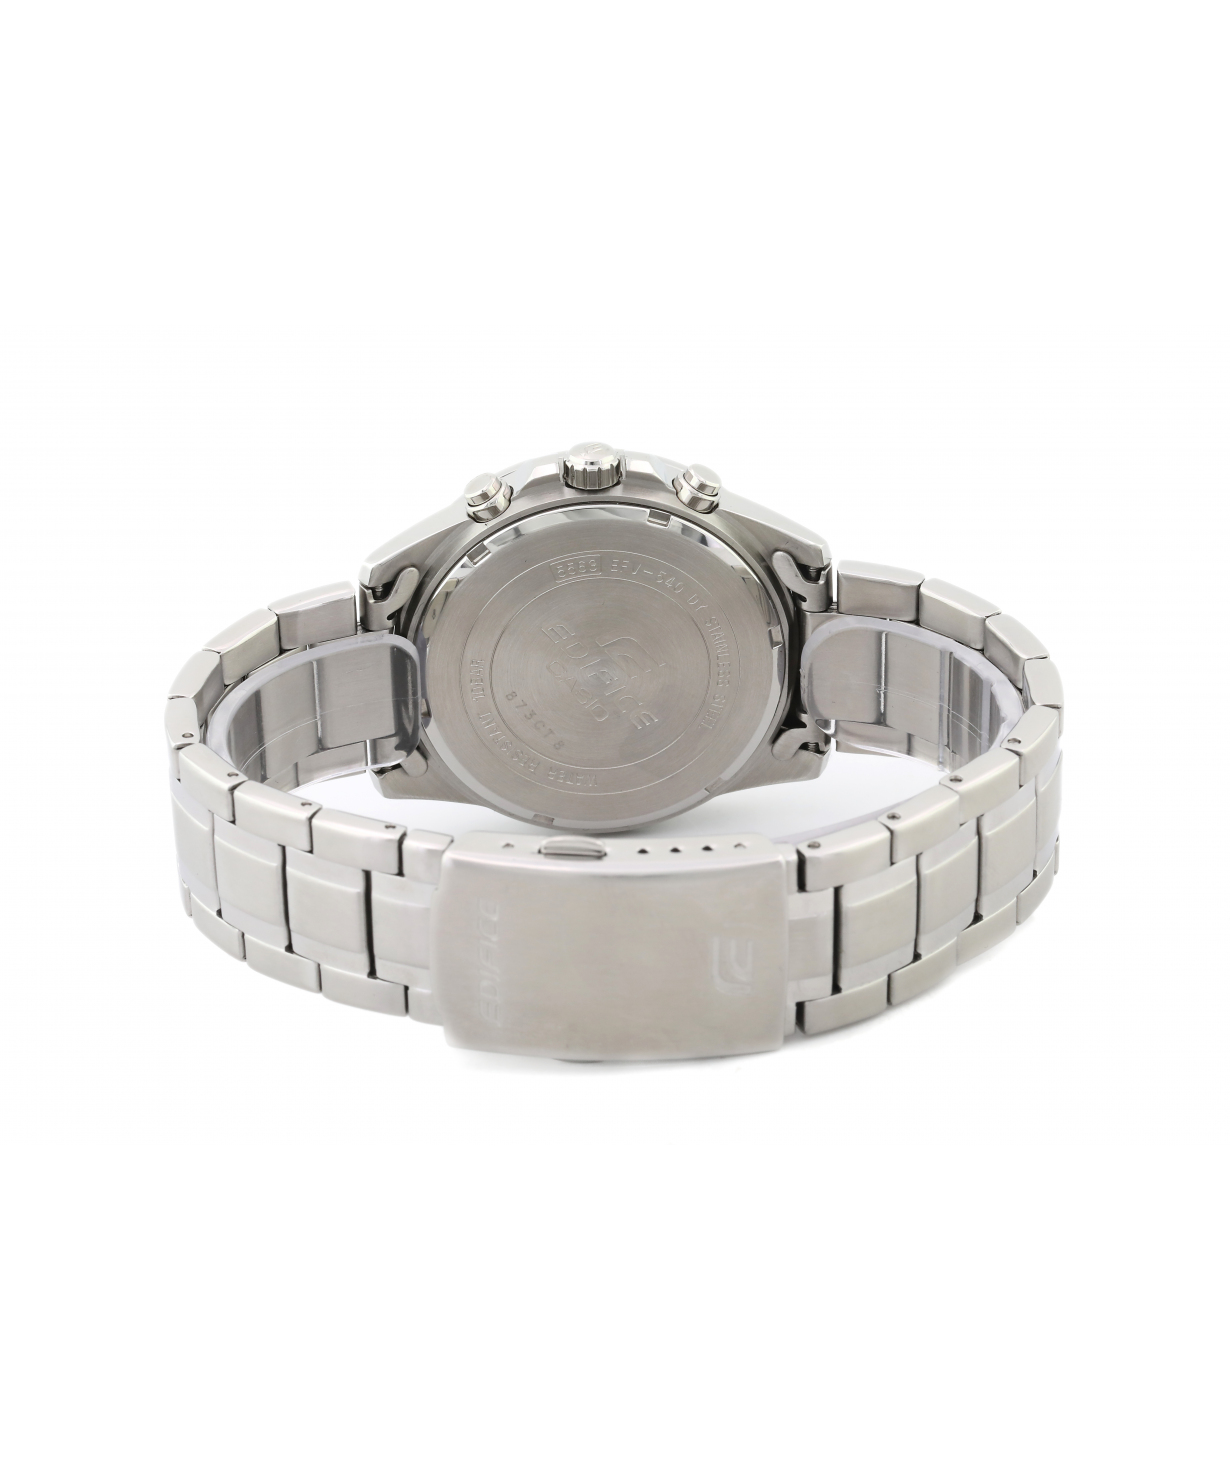 Wristwatch `Casio` EFV-540D-1A2VUDF